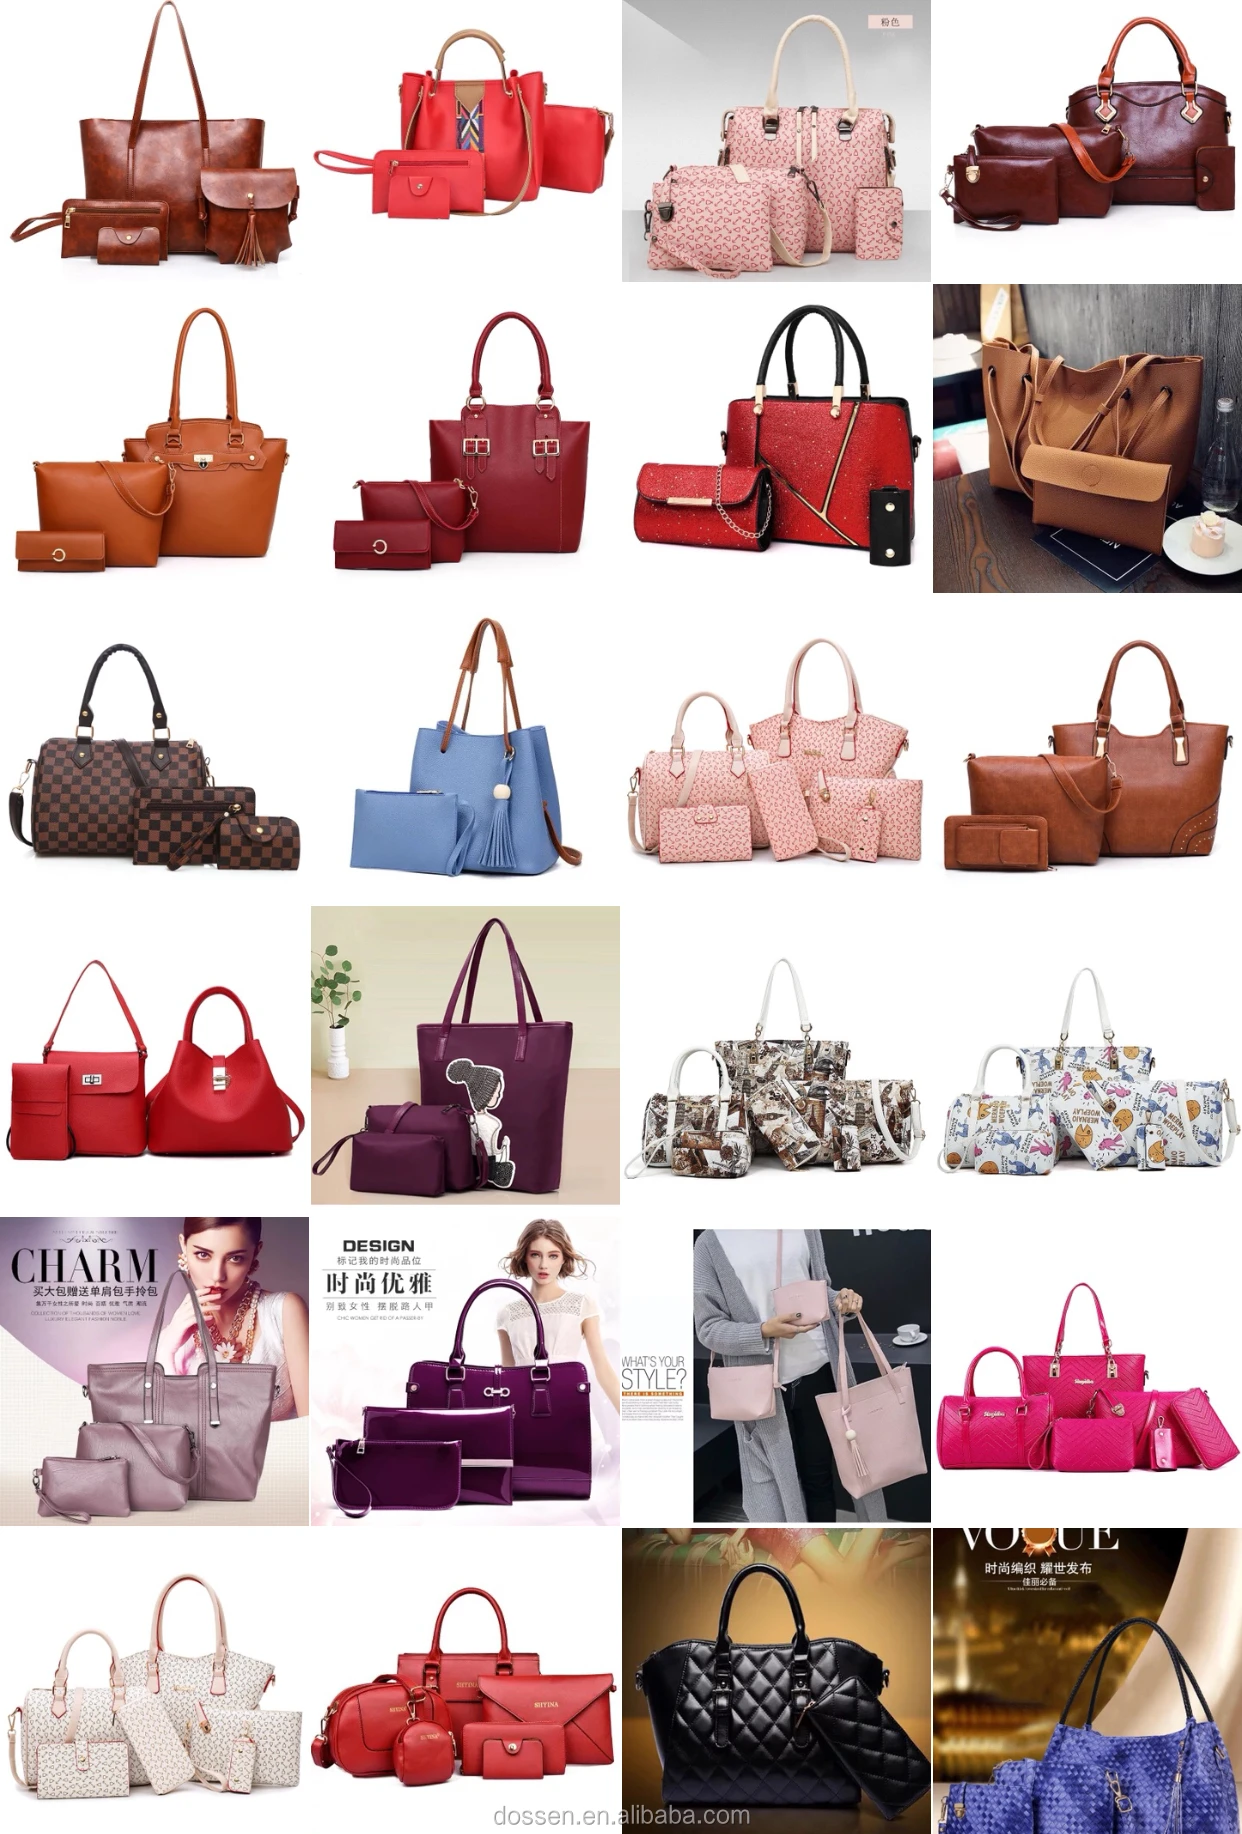 Elegant milano handbags For Stylish And Trendy Looks - Alibaba.com